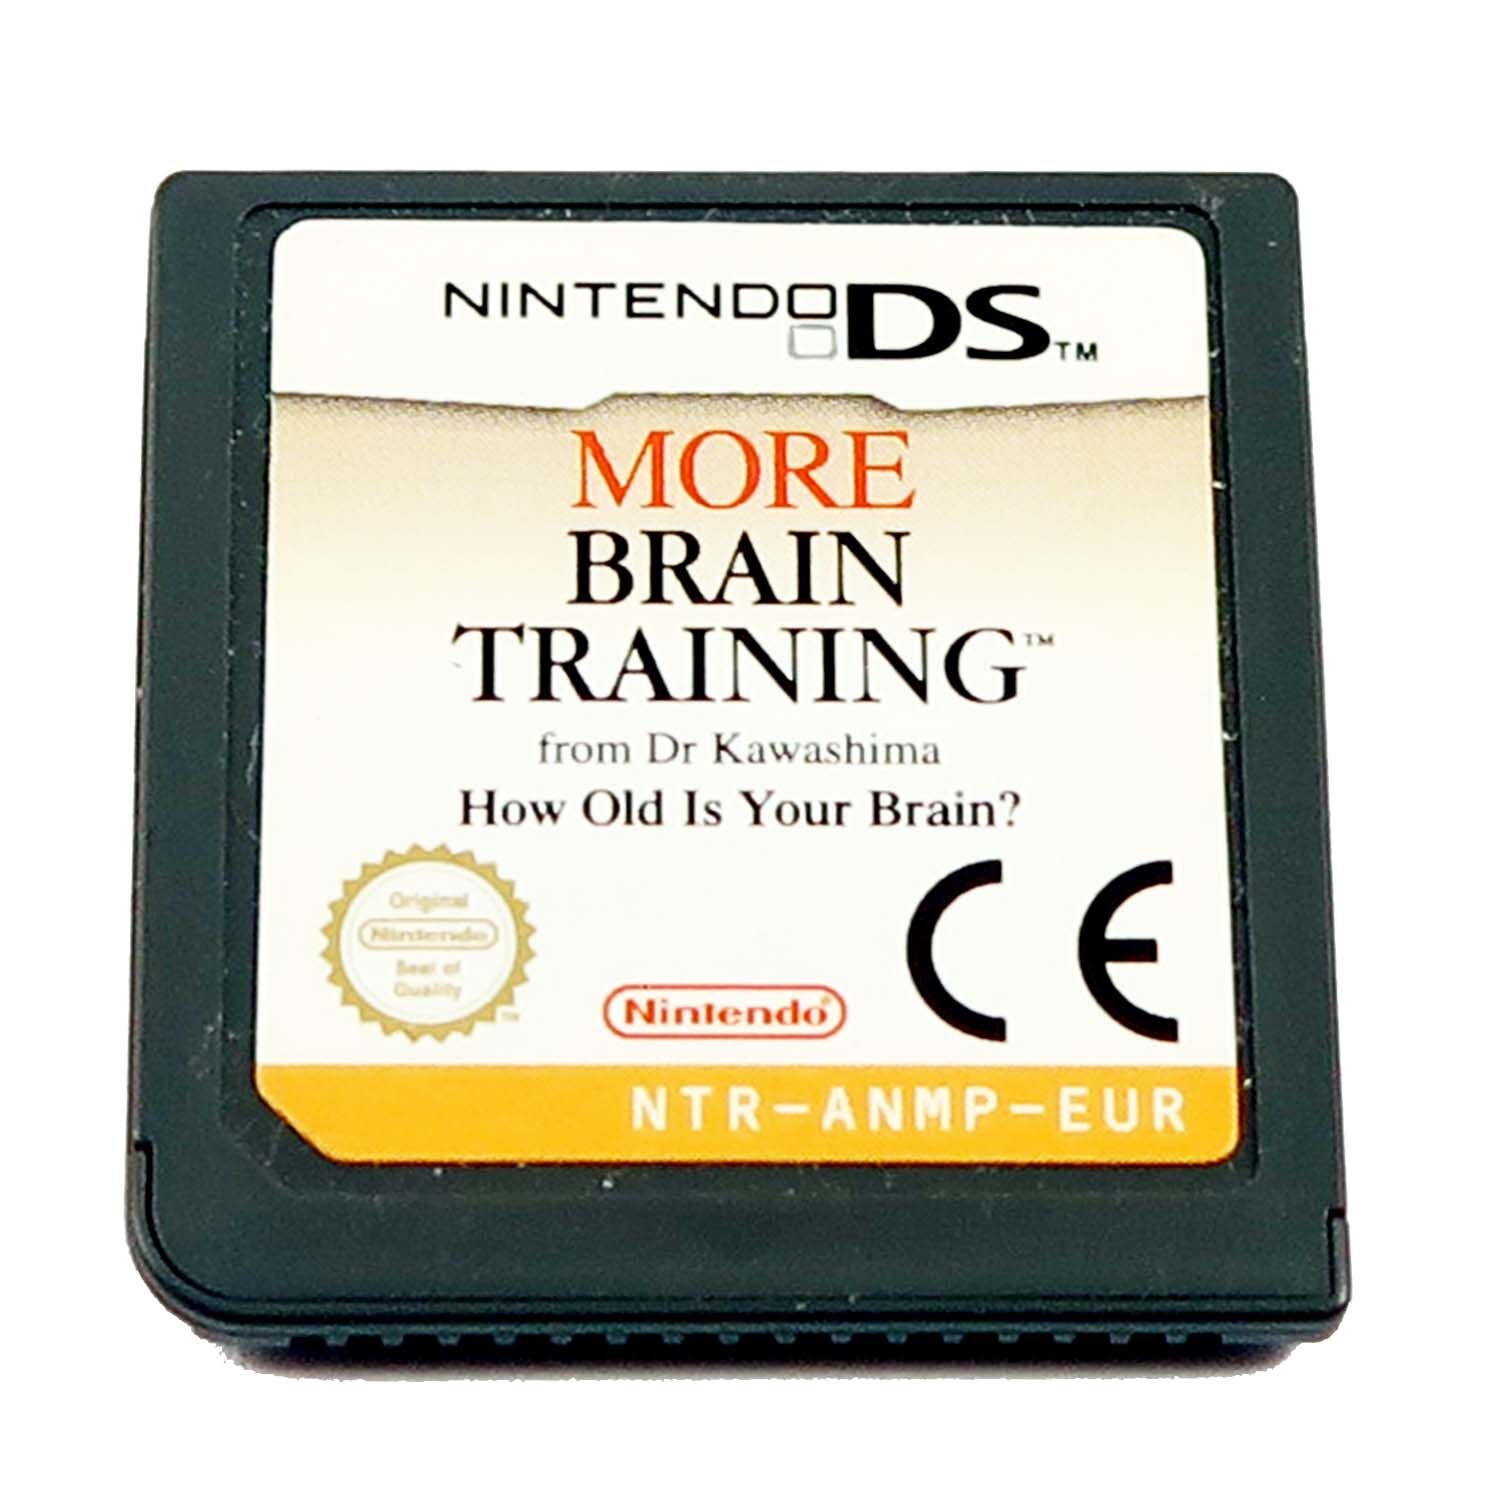 More Brain Training - Nintendo DS